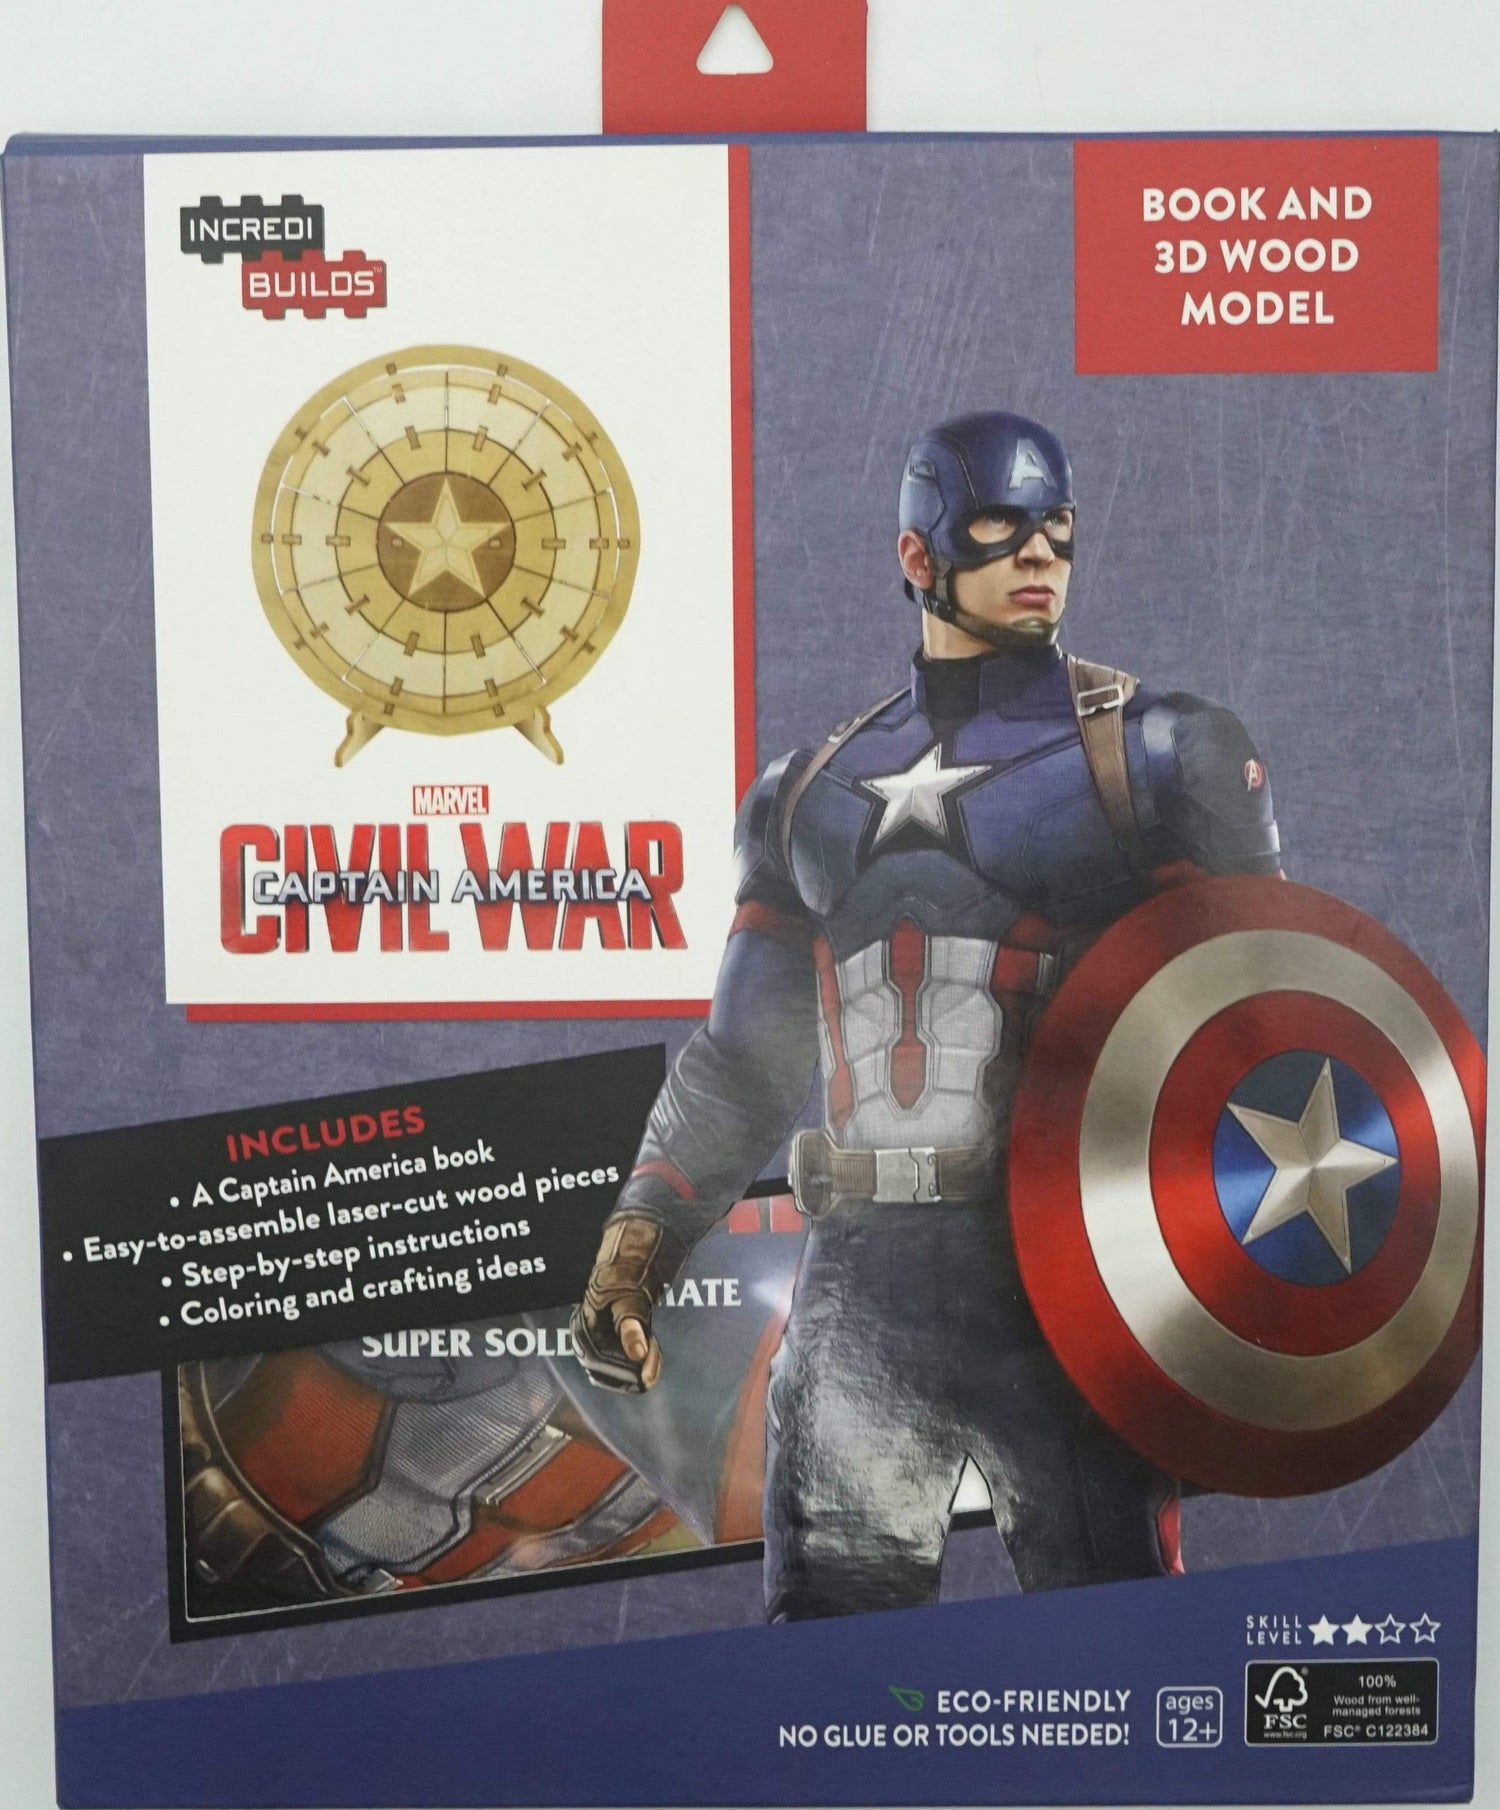 Incredibuilds: Marvel's Captain America: Civil War 3D Wood Model